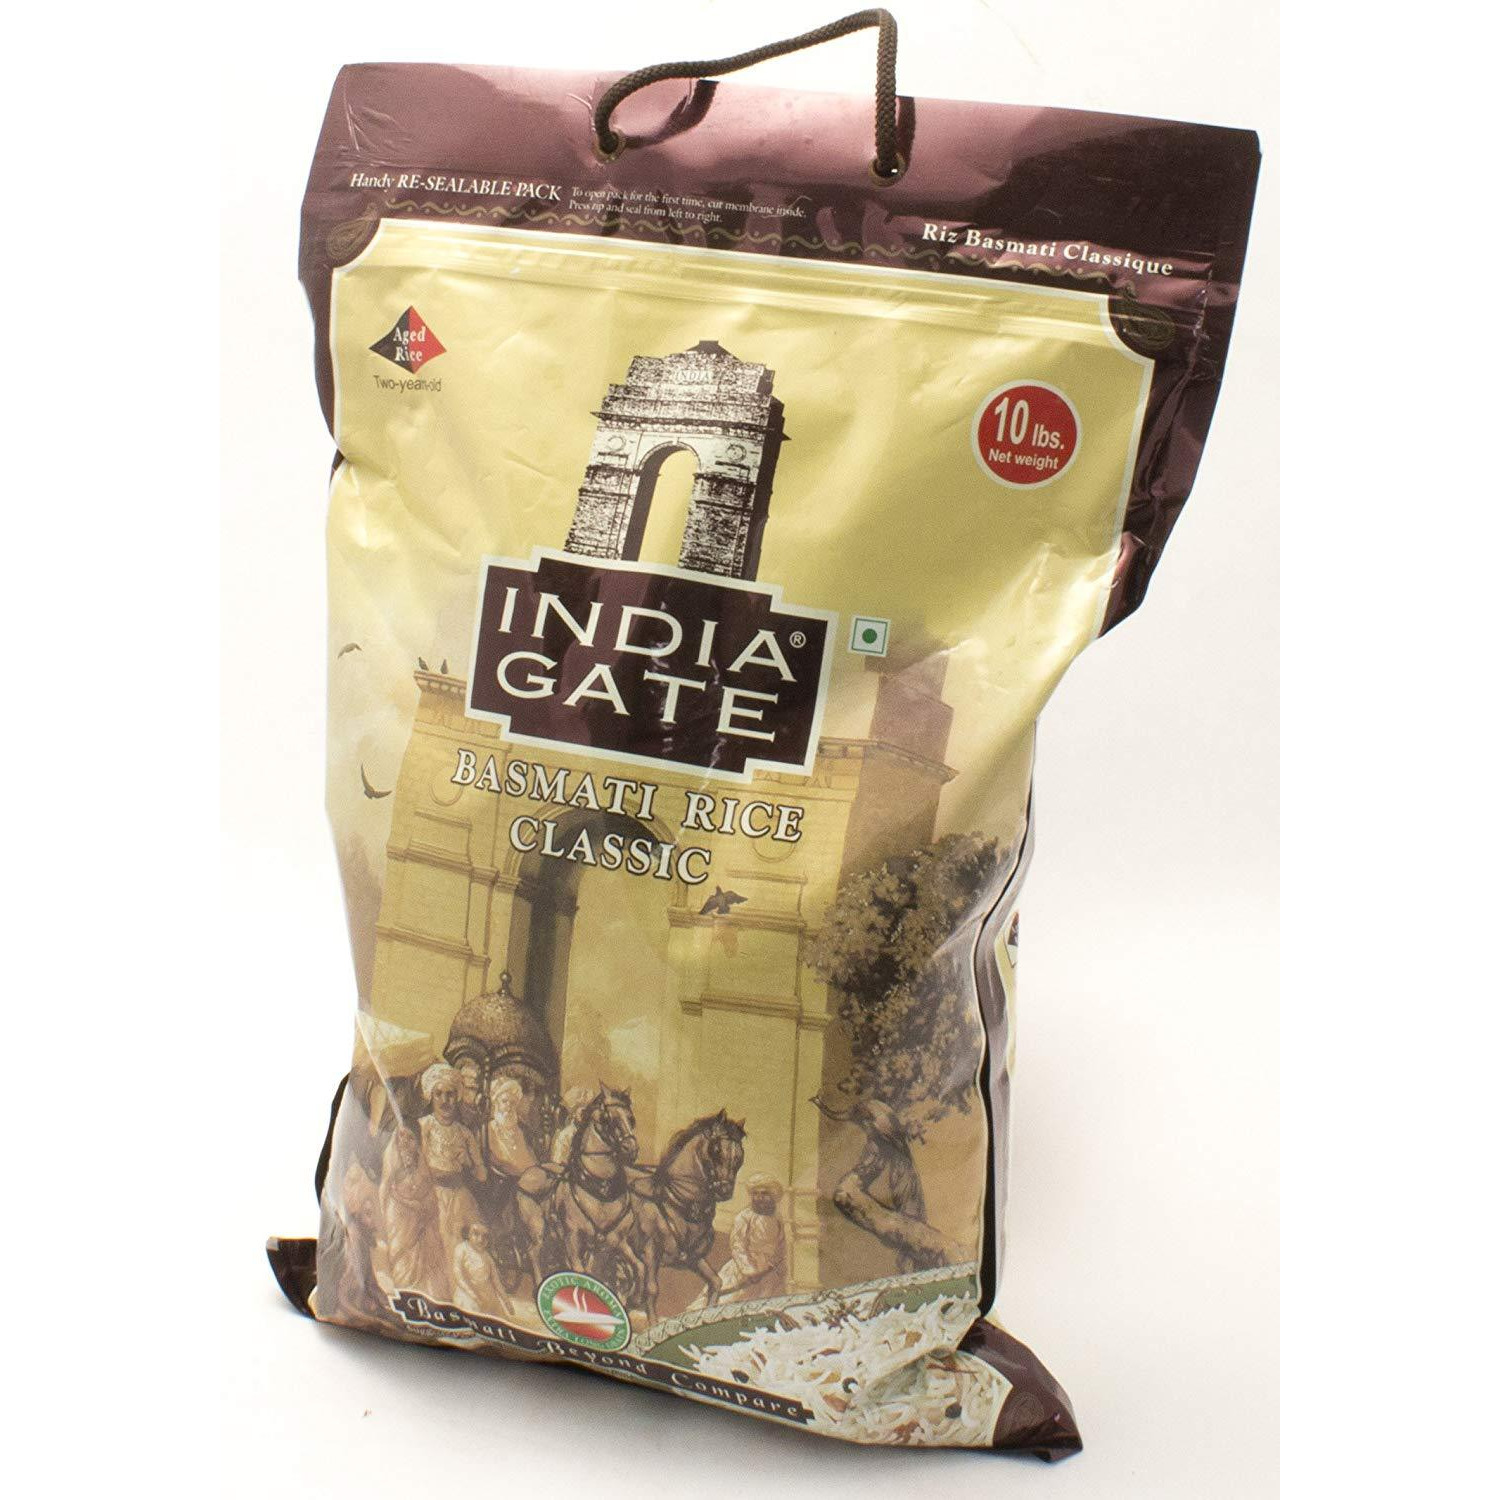 India Gate Basmati Rice, Classic, 10-Pounds